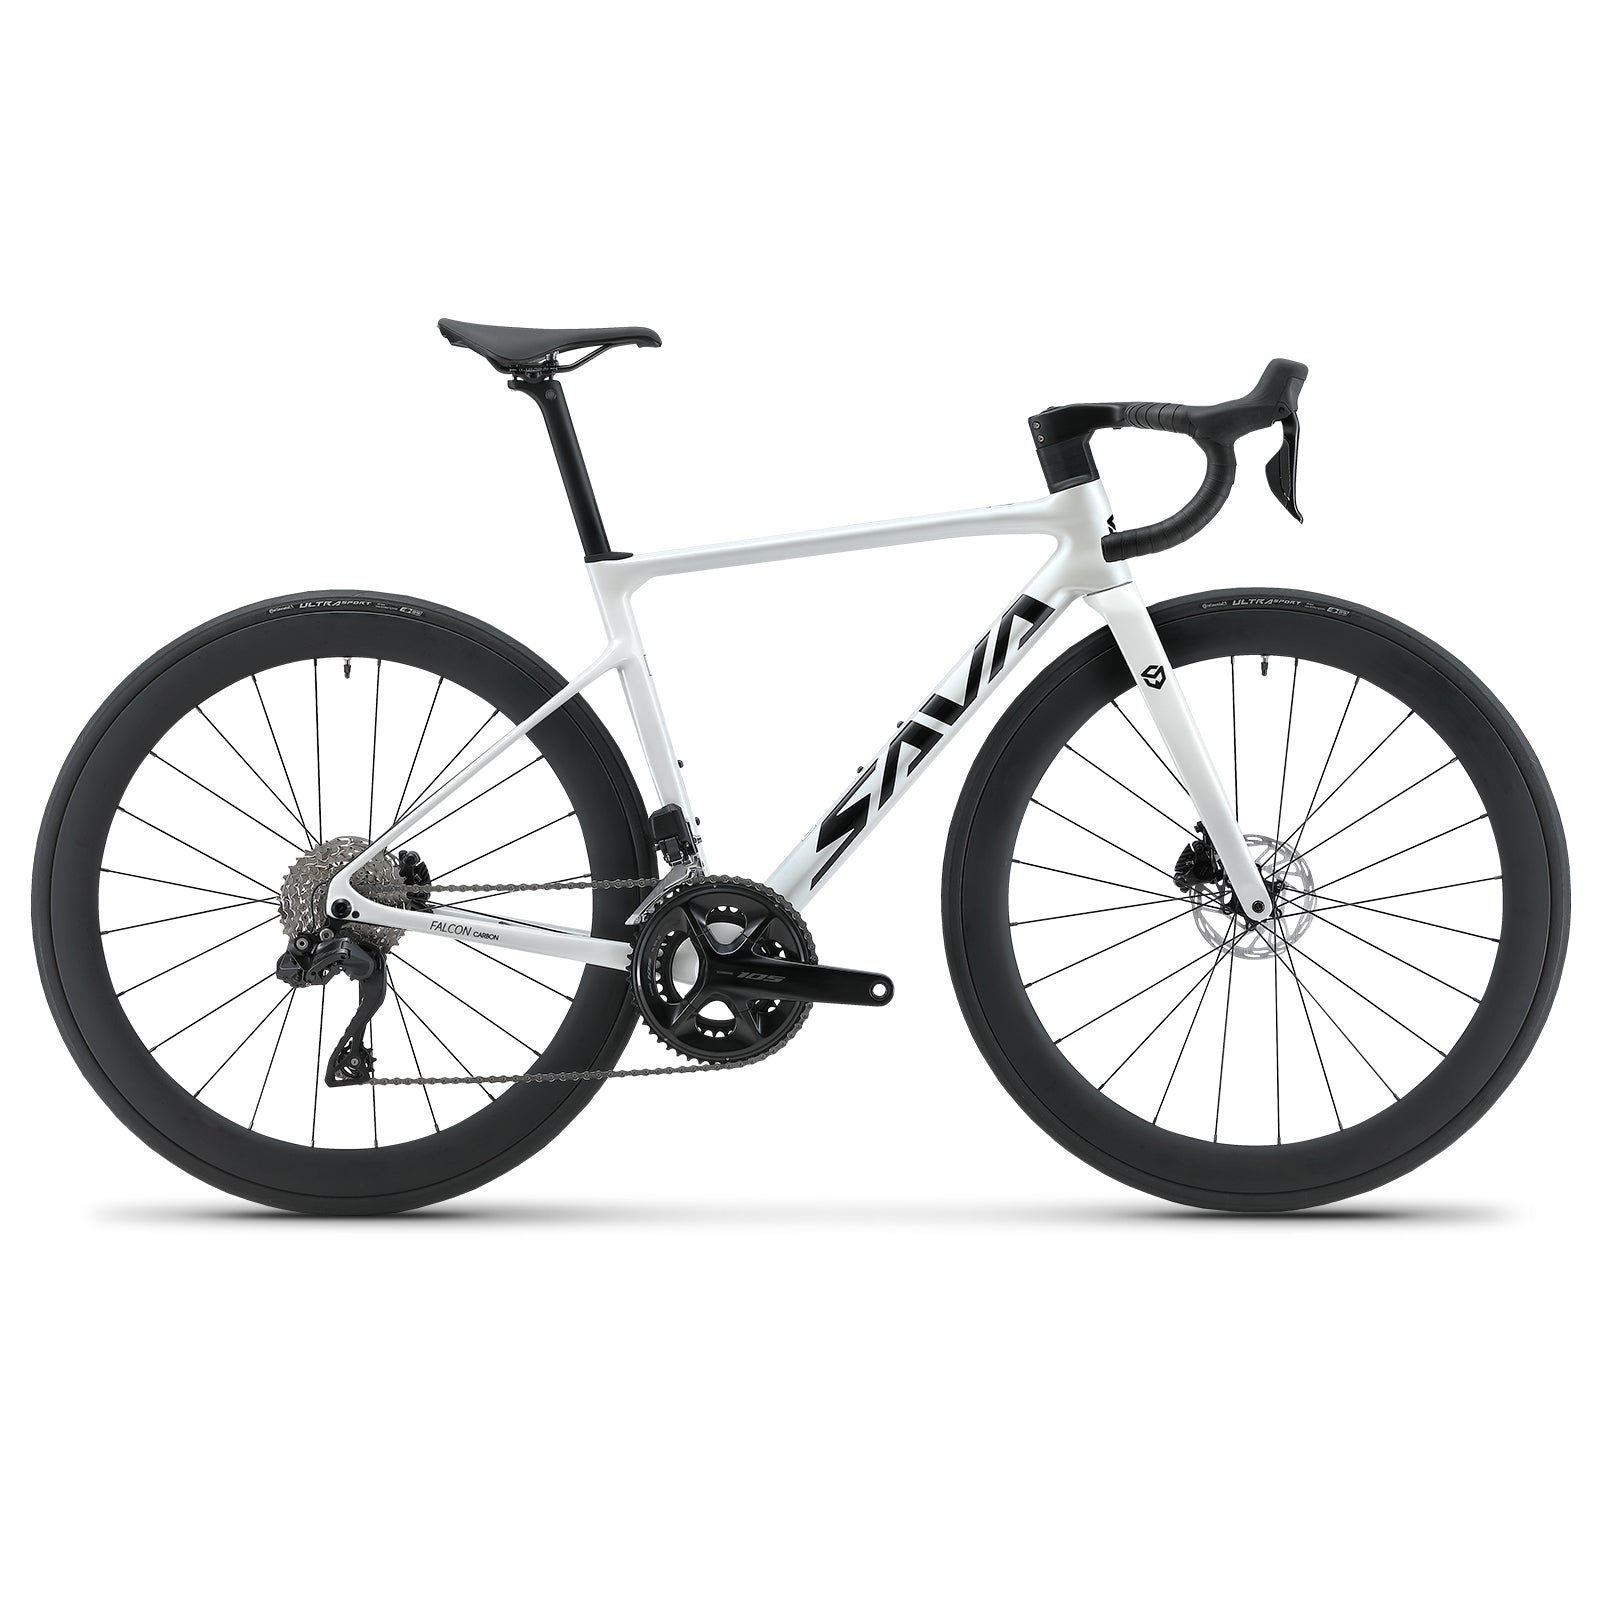 Full Carbon Road Bike|Shimano 105 Di2 Groupset|SAVA Falcon 7.0 White